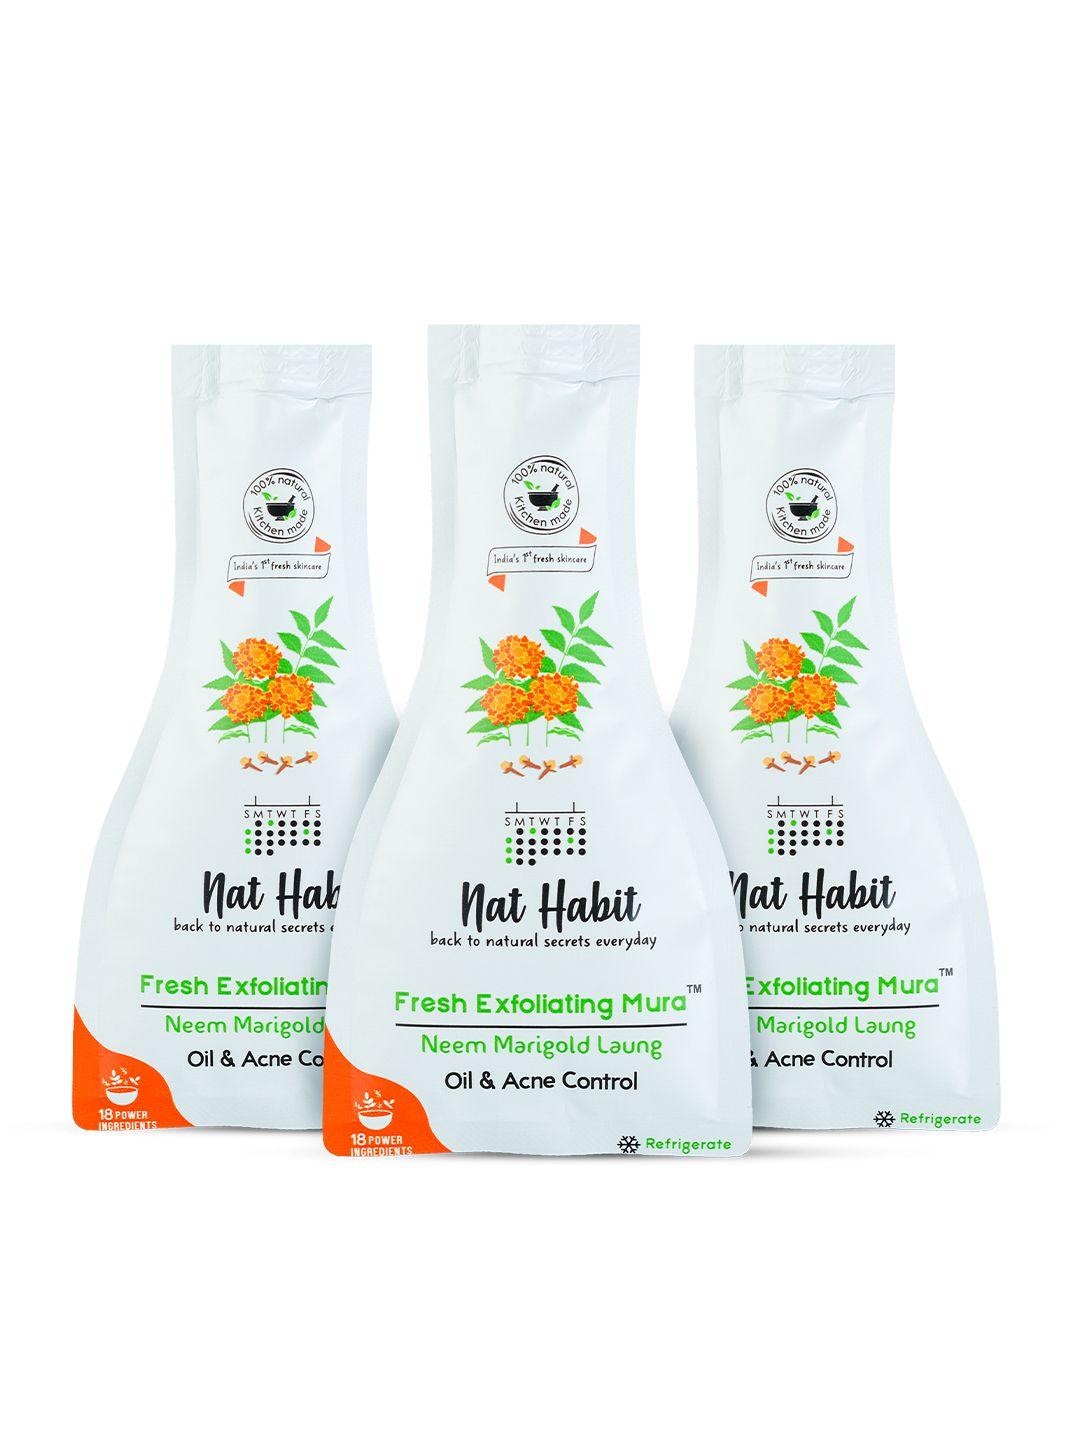 nat habit set of 3 fresh exfoliating mura with neem marigold  laung face scrub - 25g each